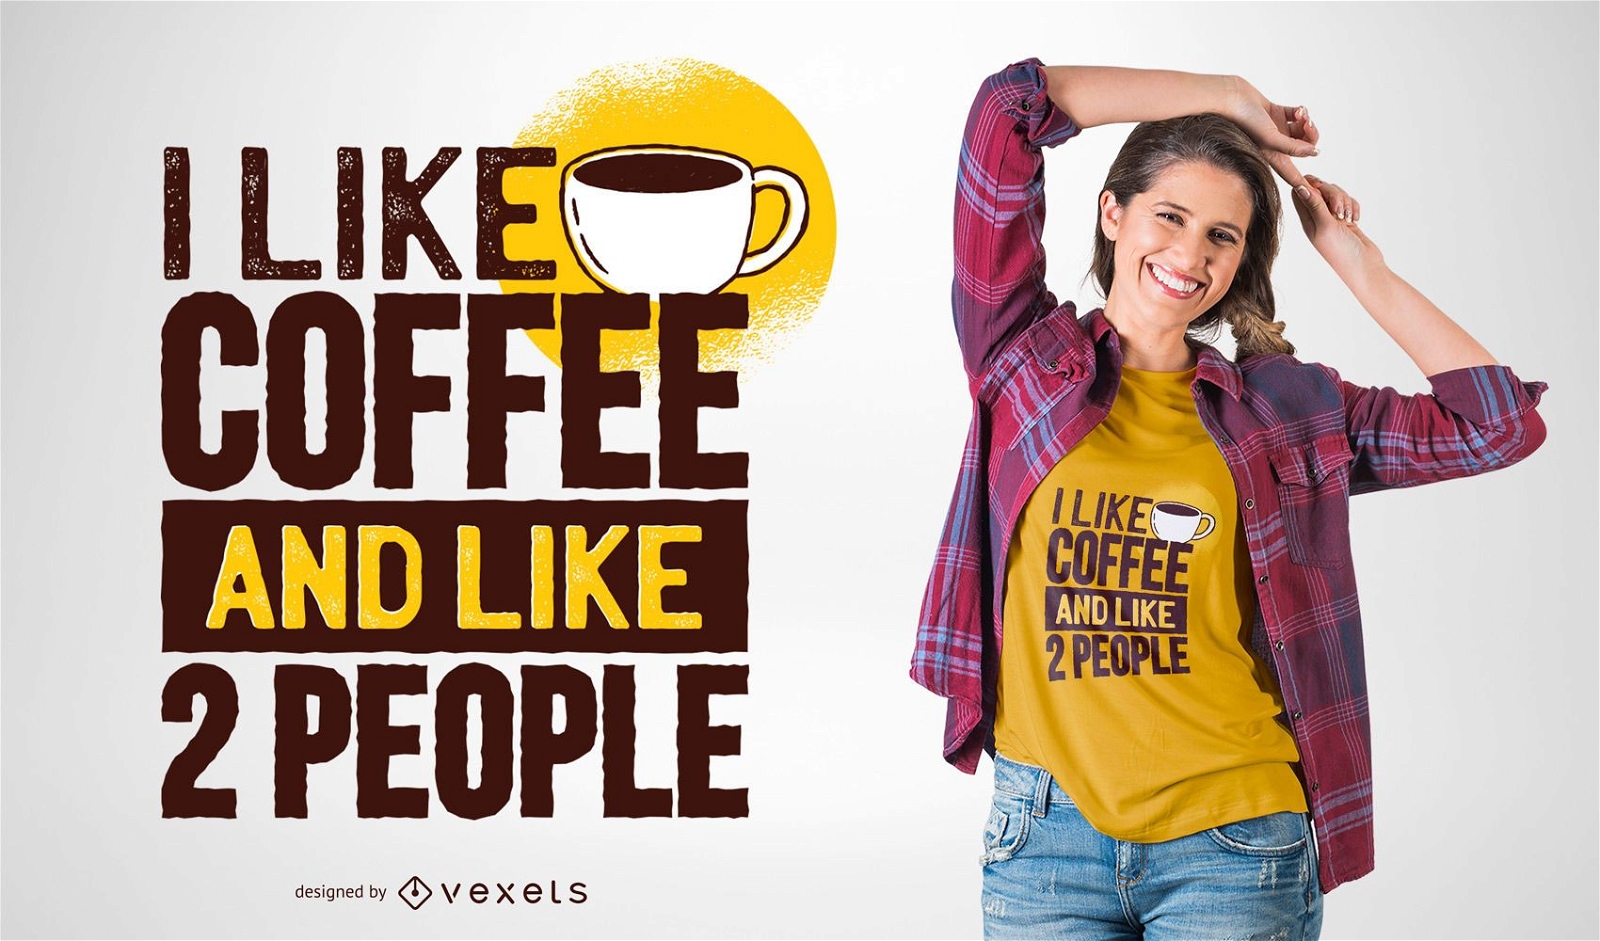 I like coffee t-shirt design